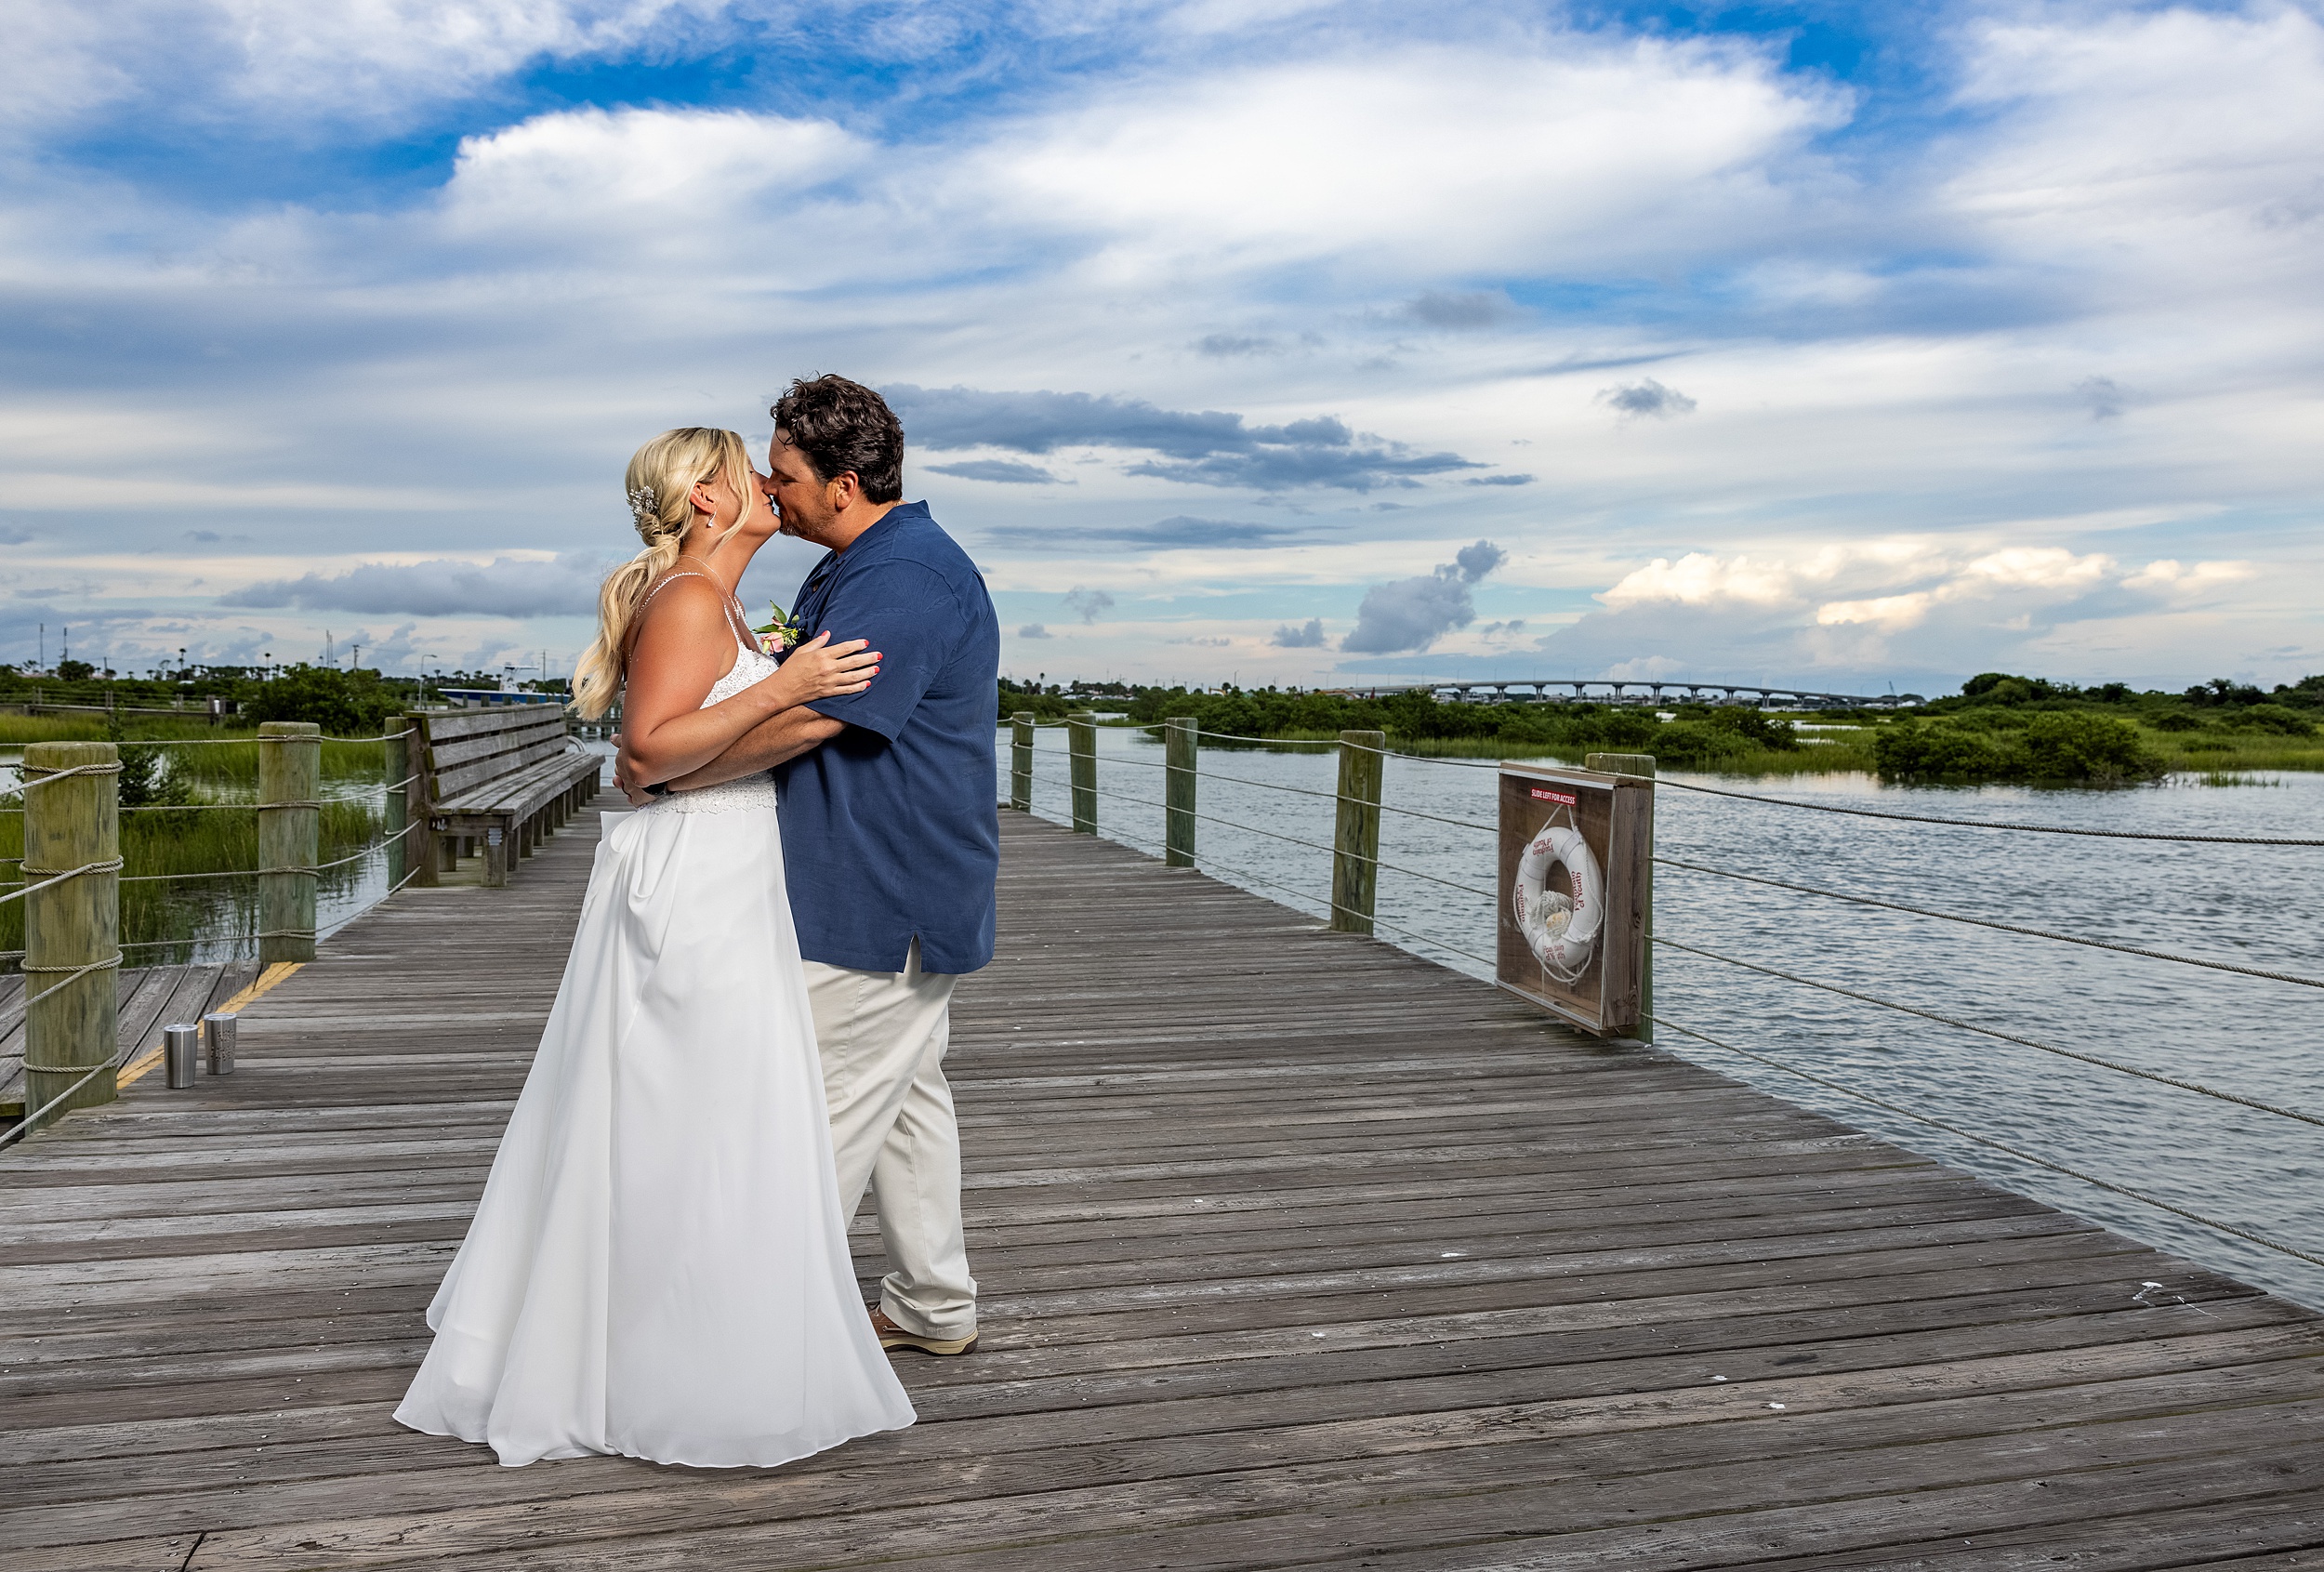 Newlyweds kiss on a river boardwalk